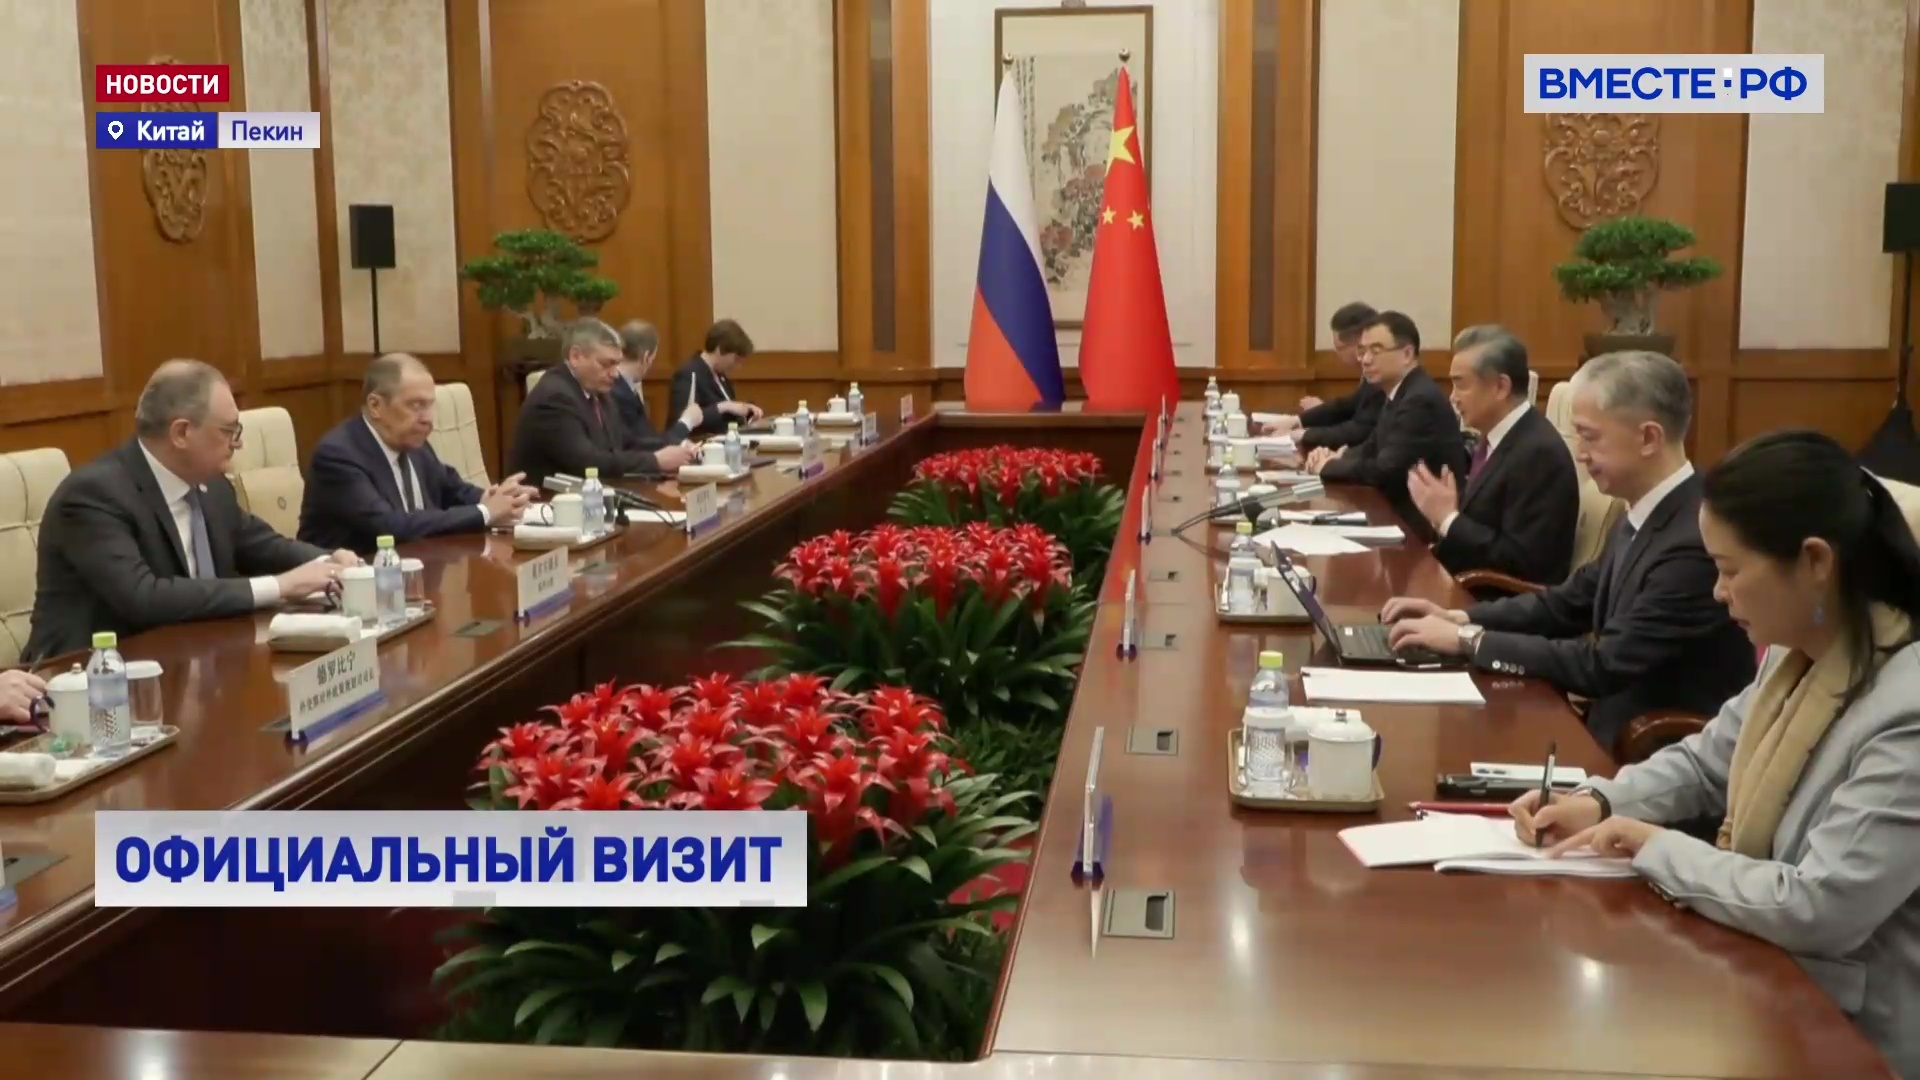 Москва и Пекин продолжат сотрудничество в противодействии терроризму, заявил Лавров